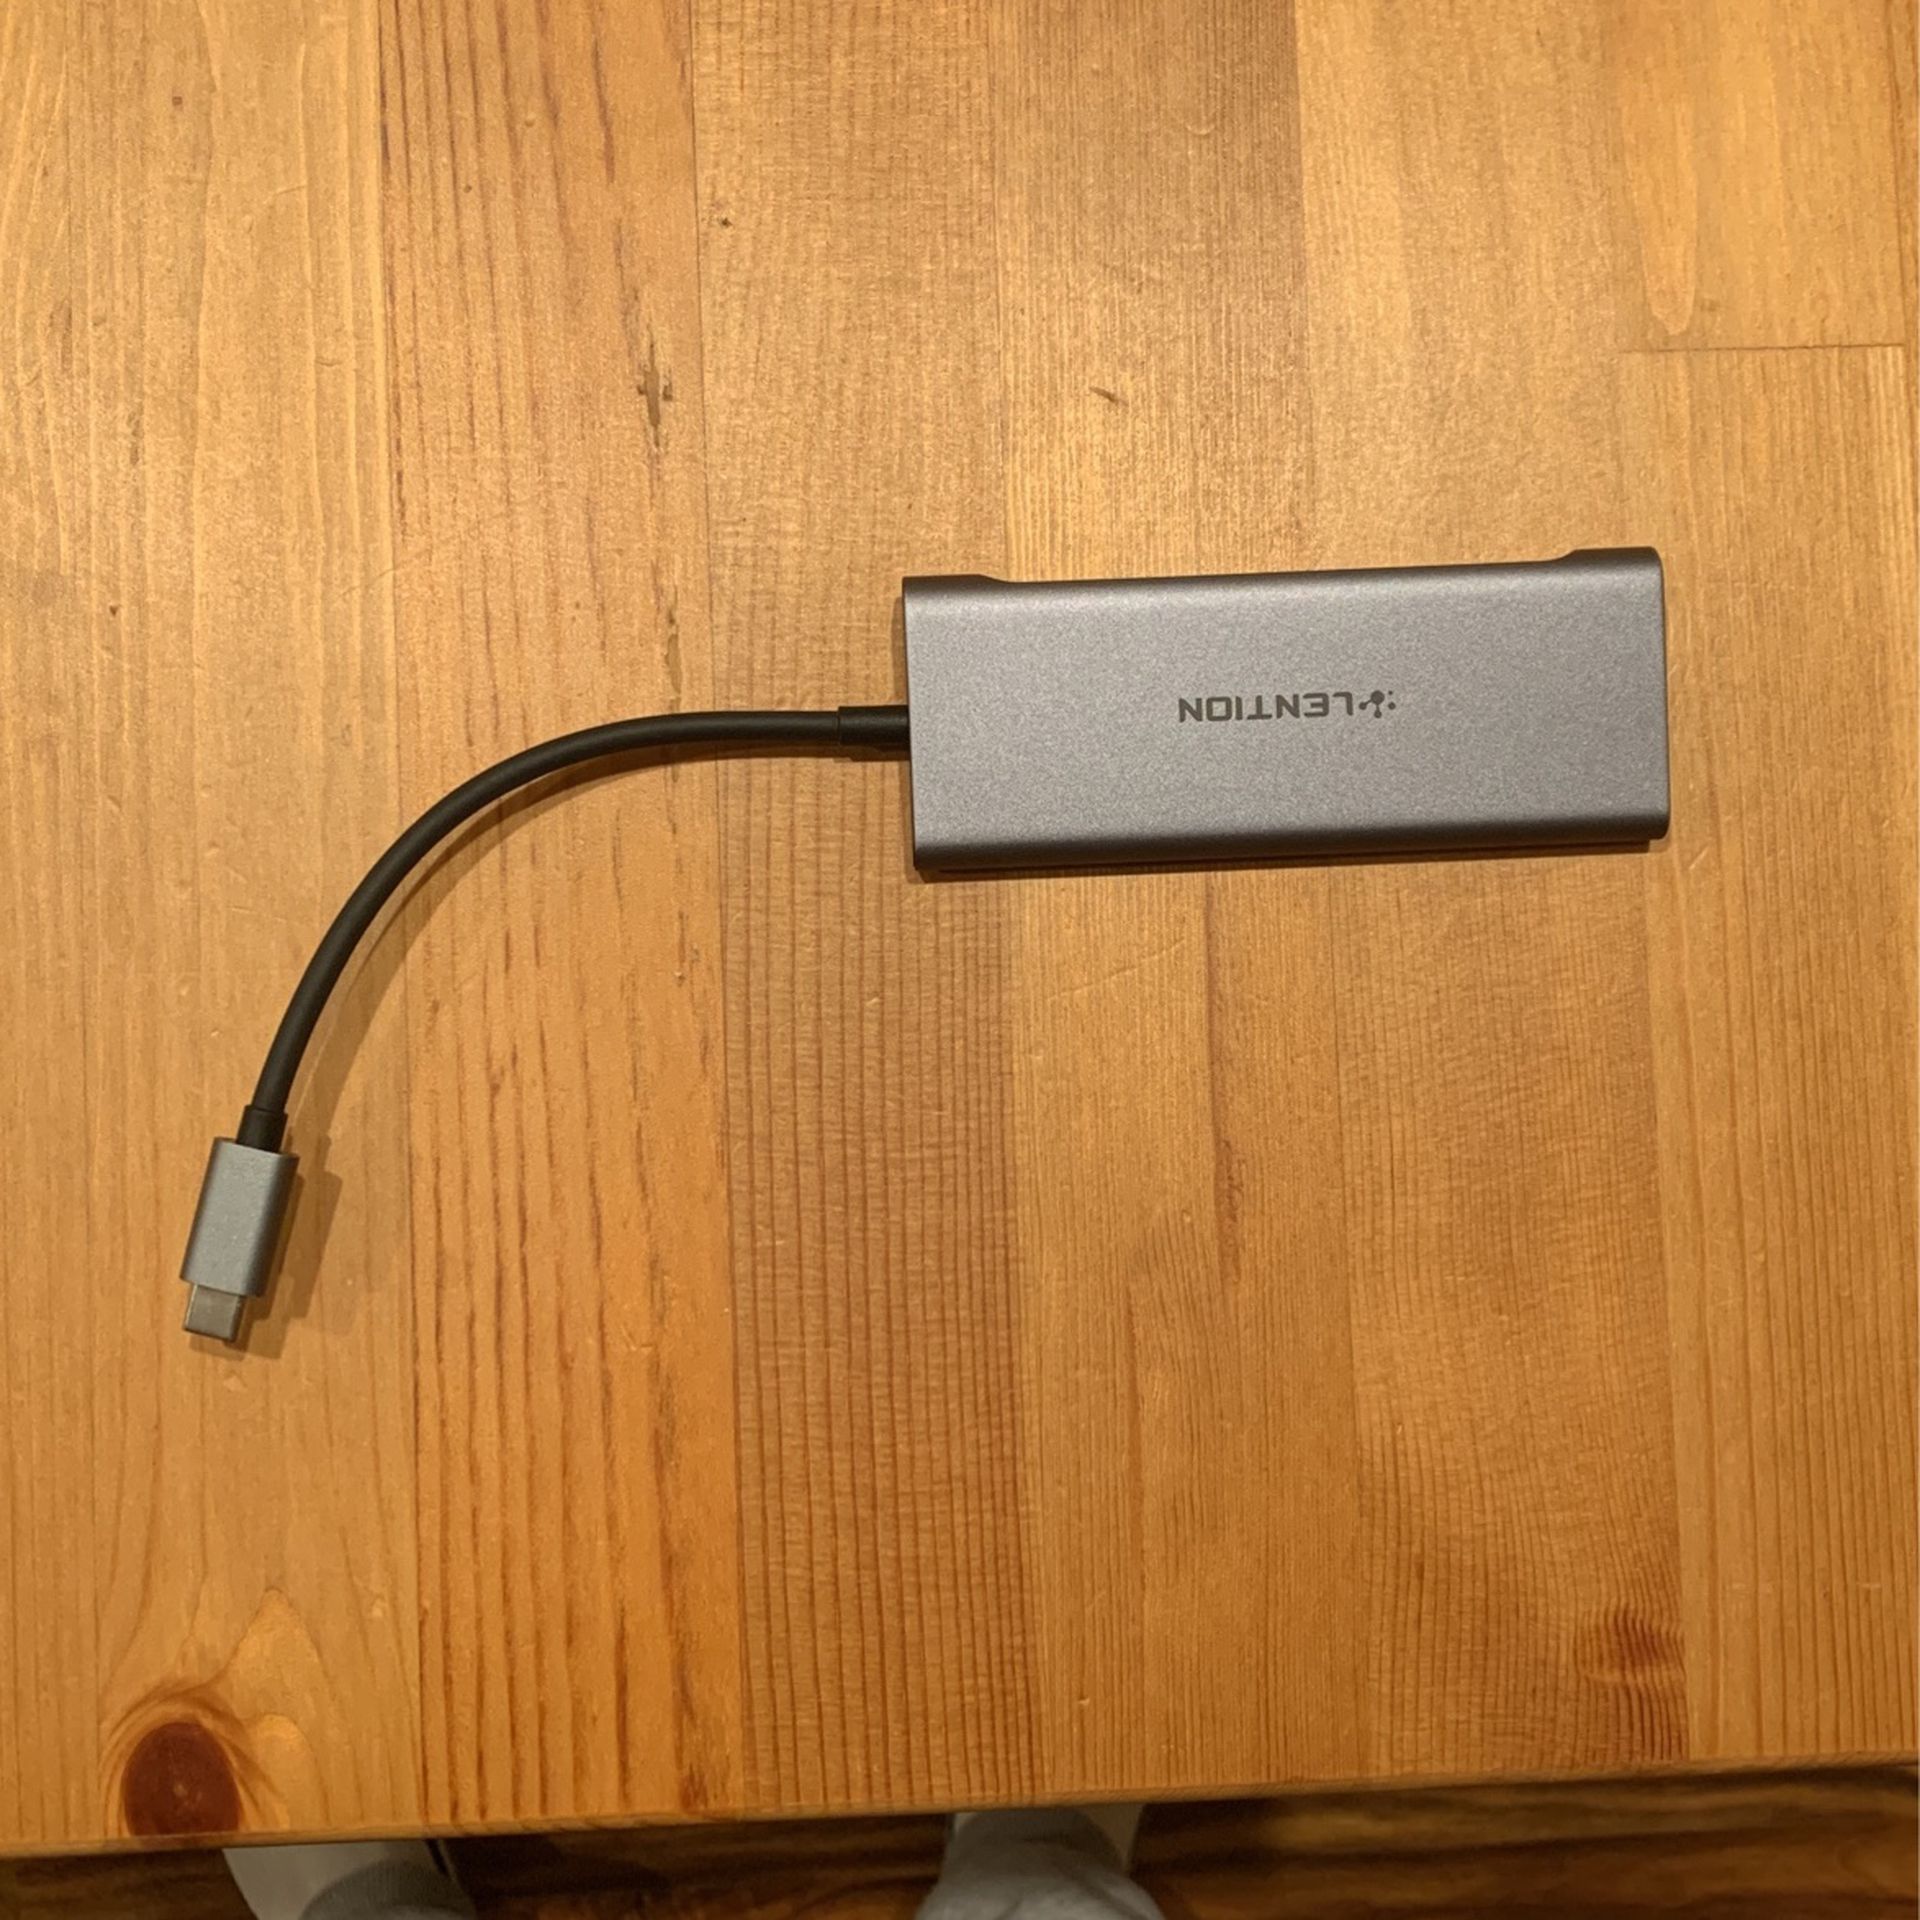 LENTION USB-C Multi-Port Hub with 4K HDMI Output, 4 USB 3.0